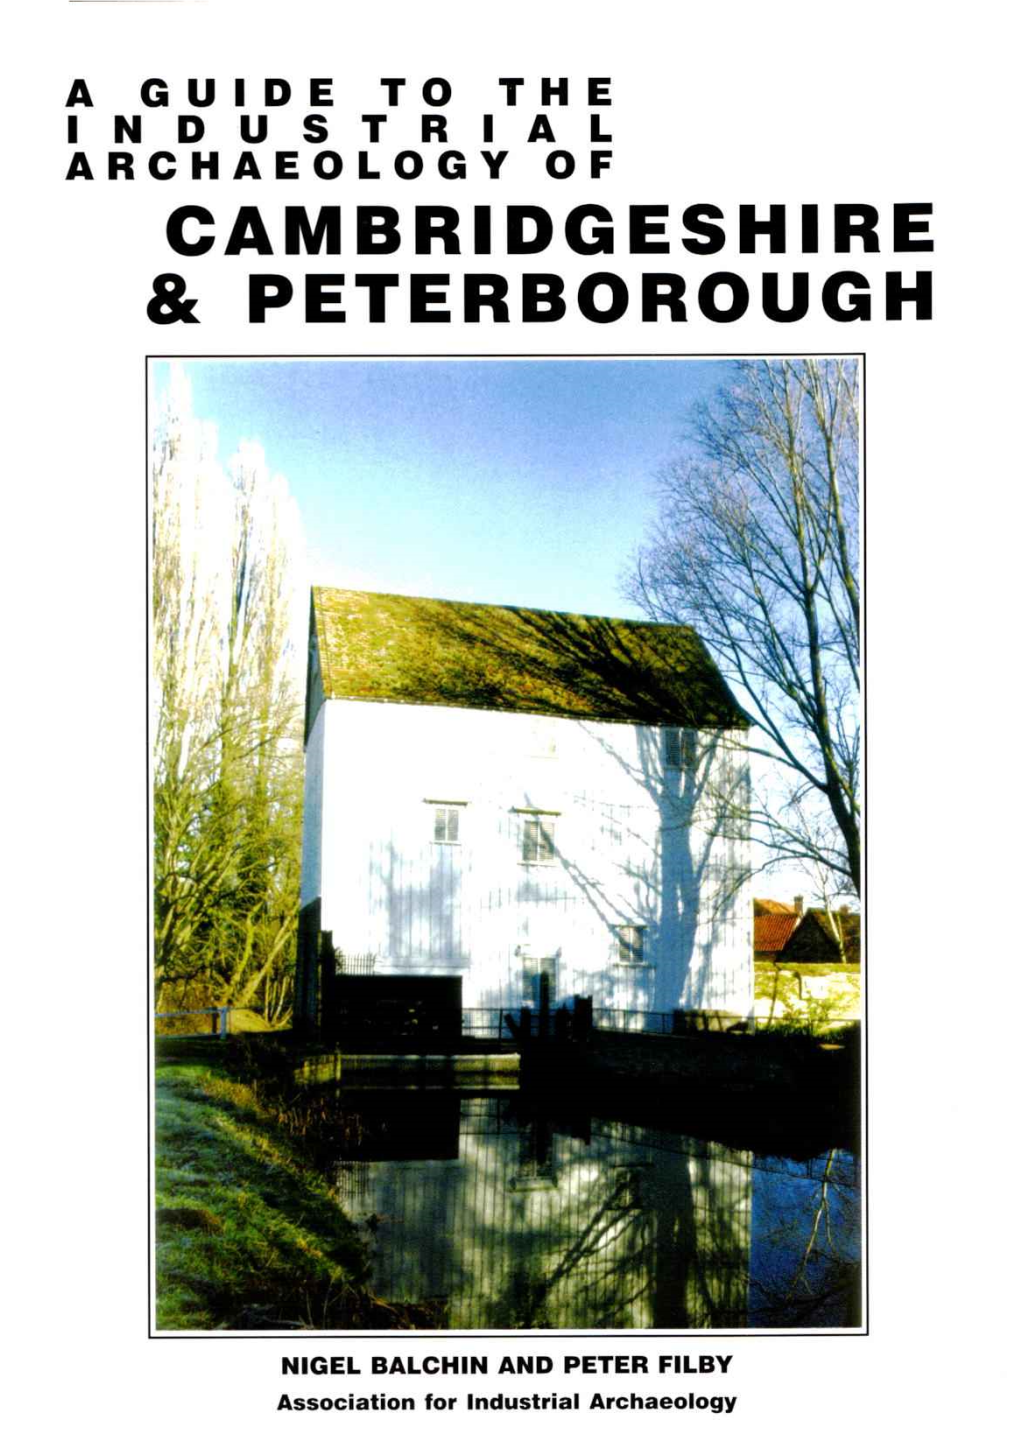 Cambridgeshire and Peterborough